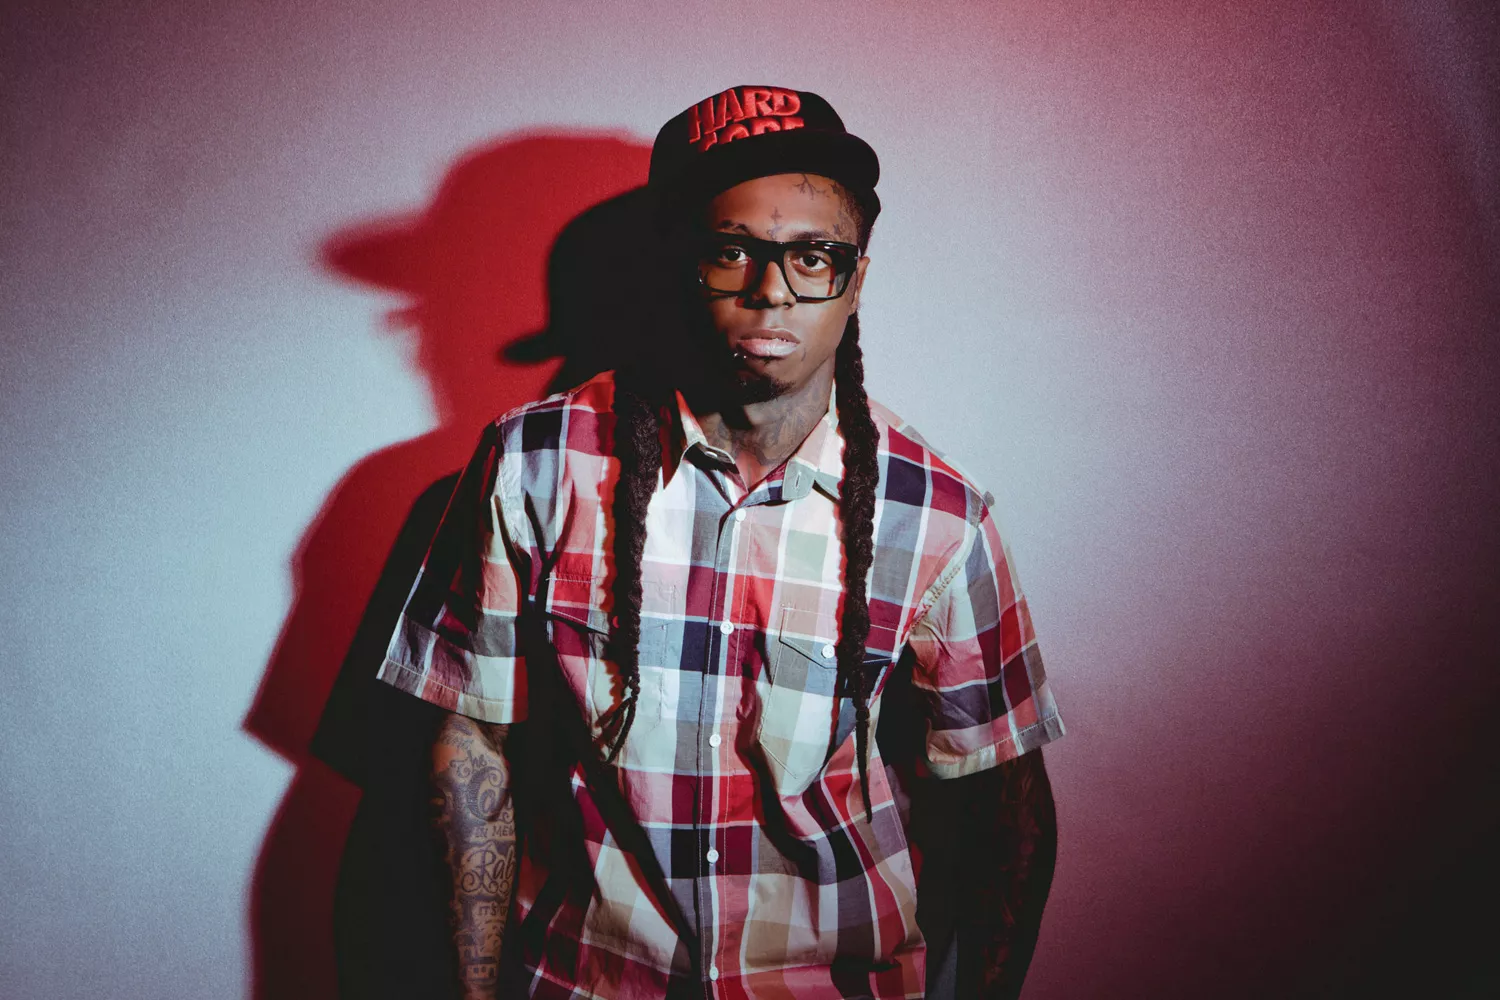 Gratis mixtape fra Lil Wayne